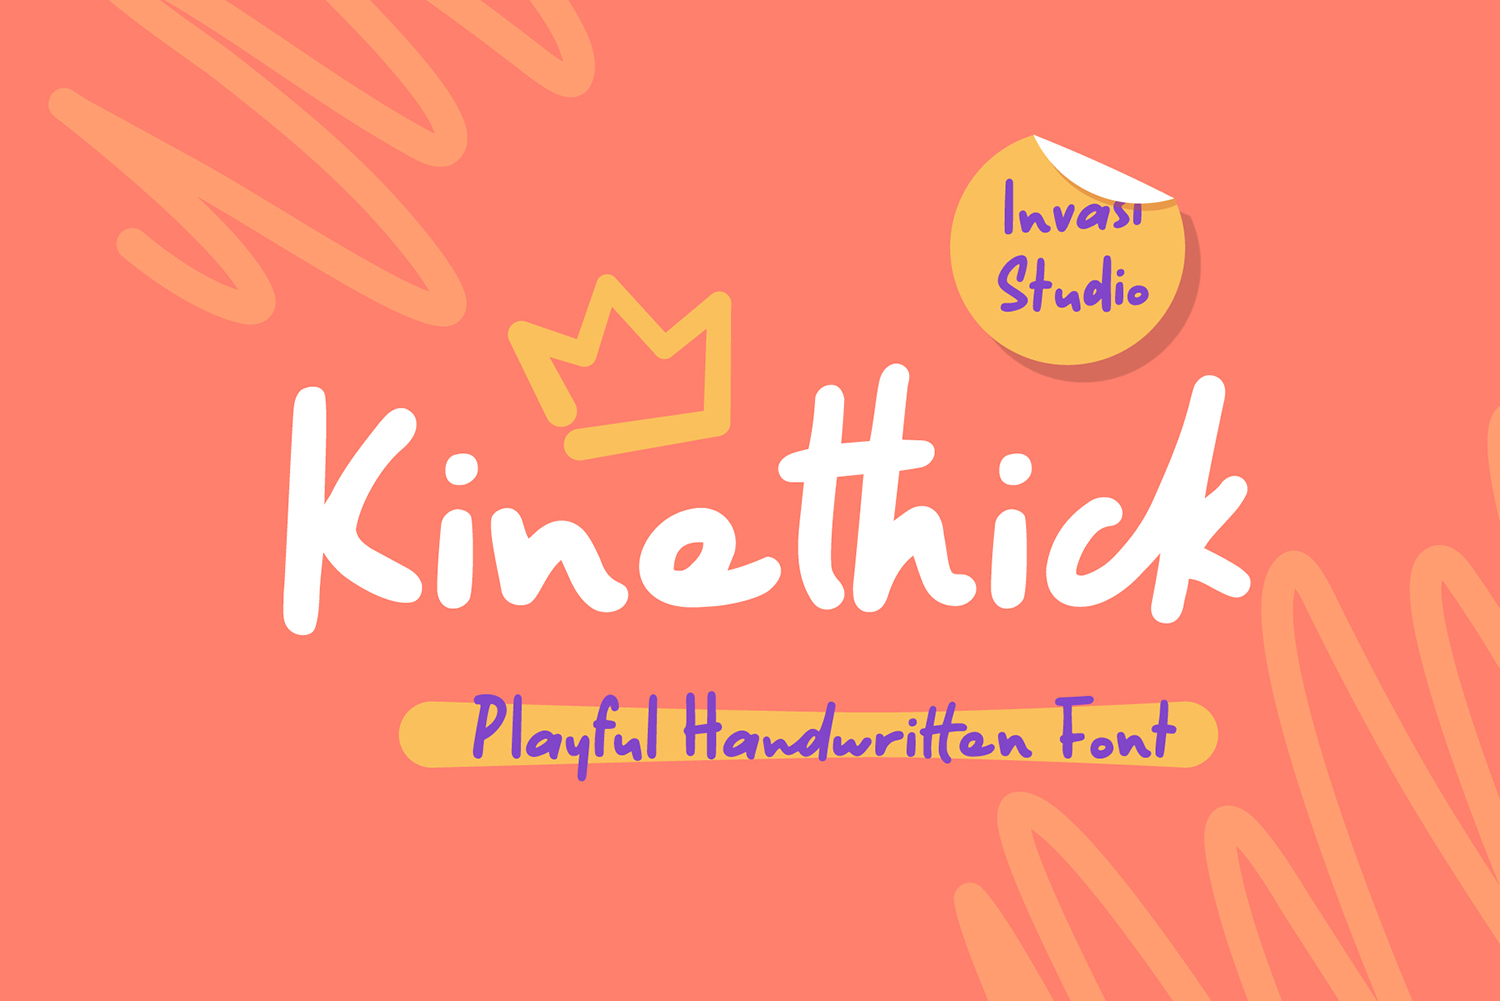 Kinethick Free Font